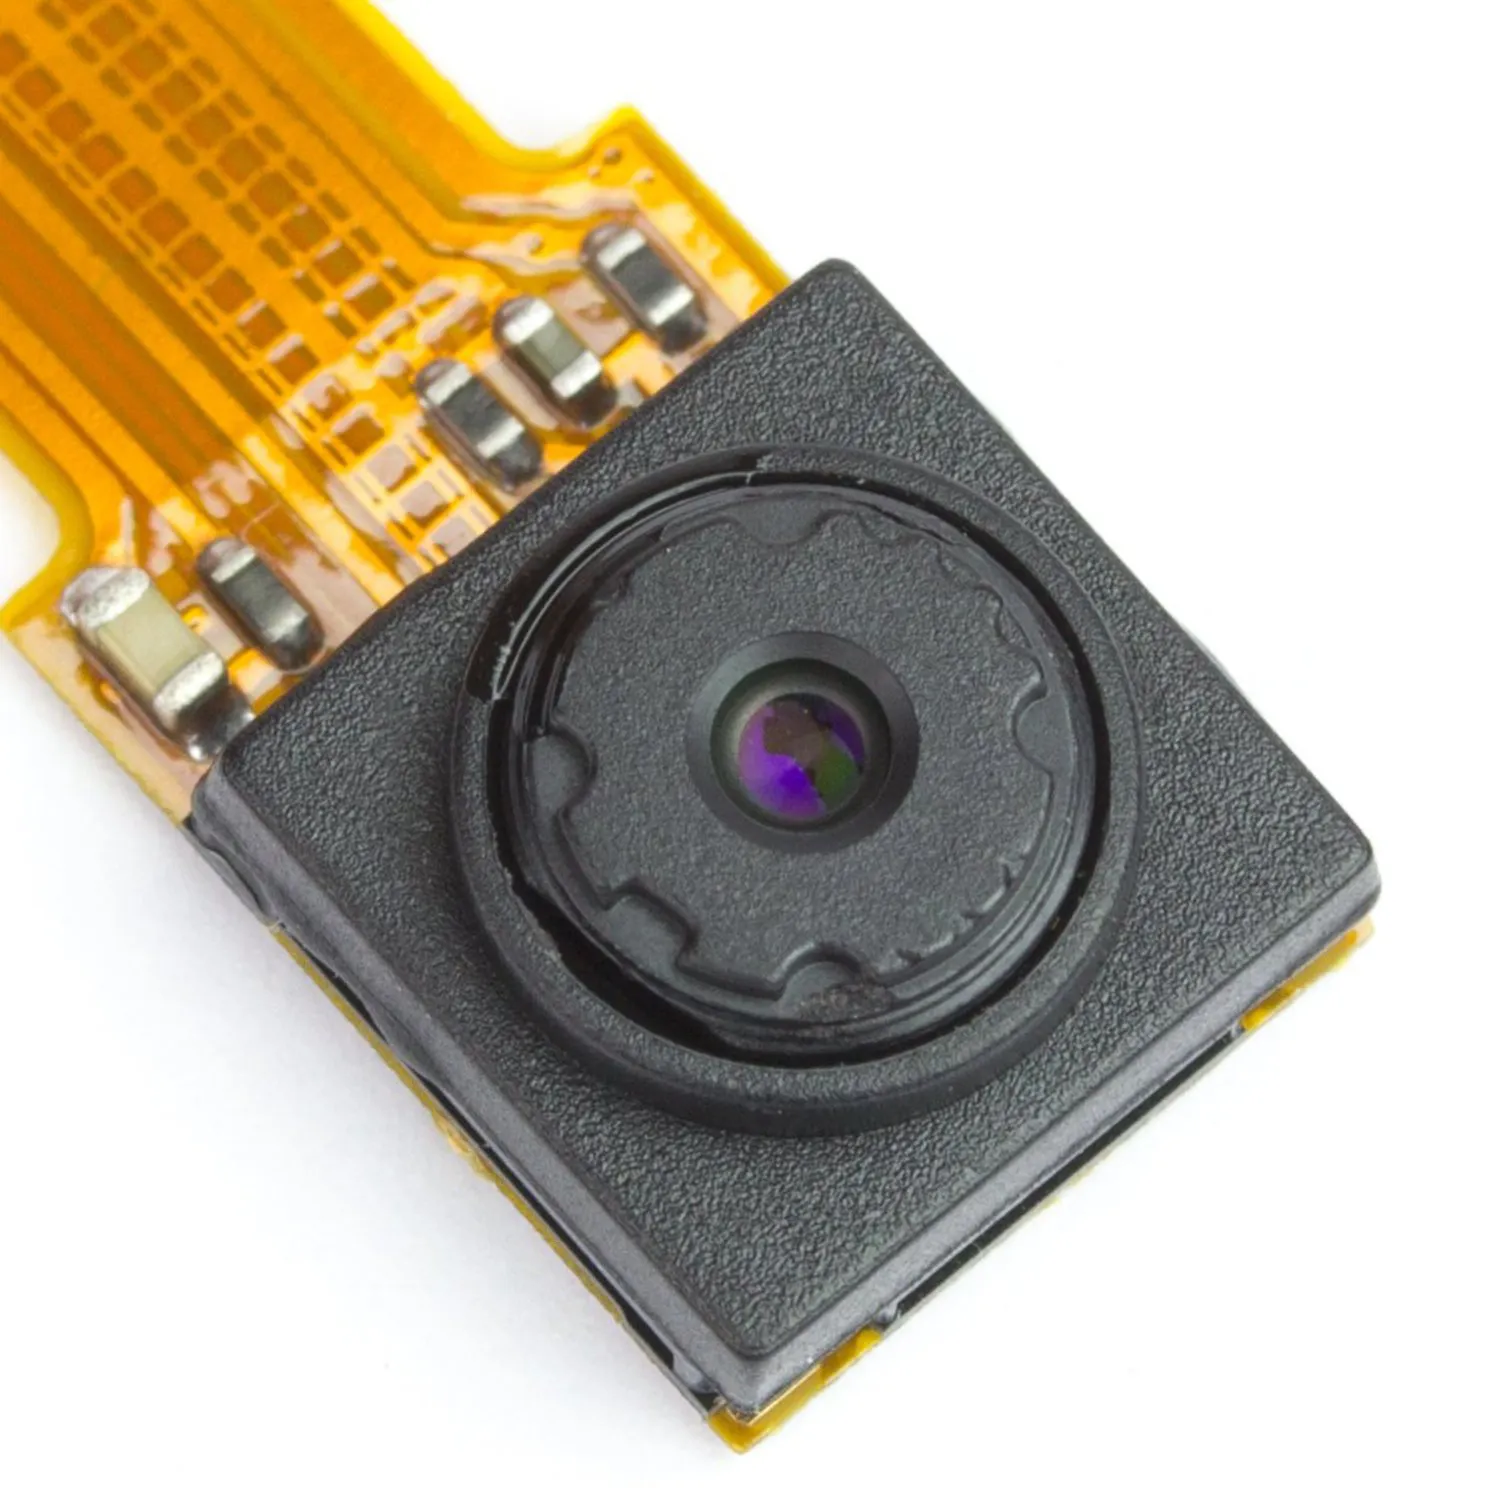 Photo of Camera Module for Raspberry Pi Zero - 160° variable focus